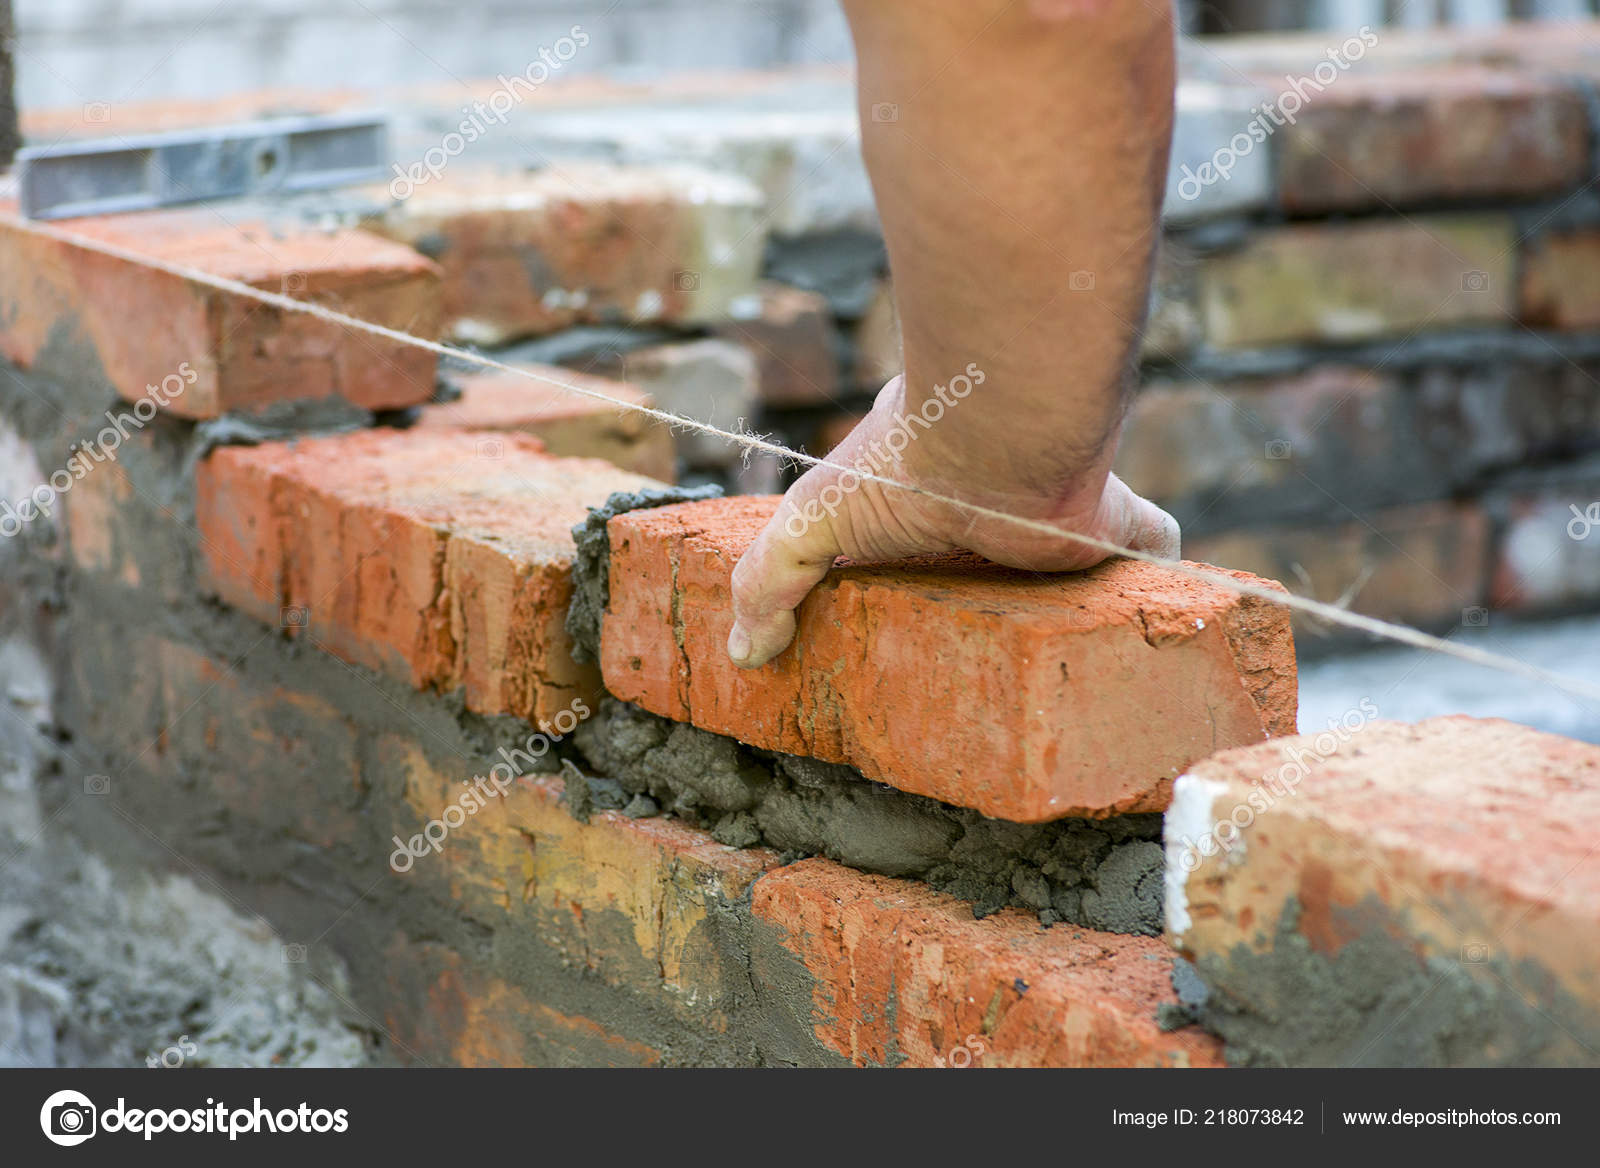 Building Brick Block Wall Construction Plant Worker Builds Brick Wall Stock Photo By C Spyrakot 218073842